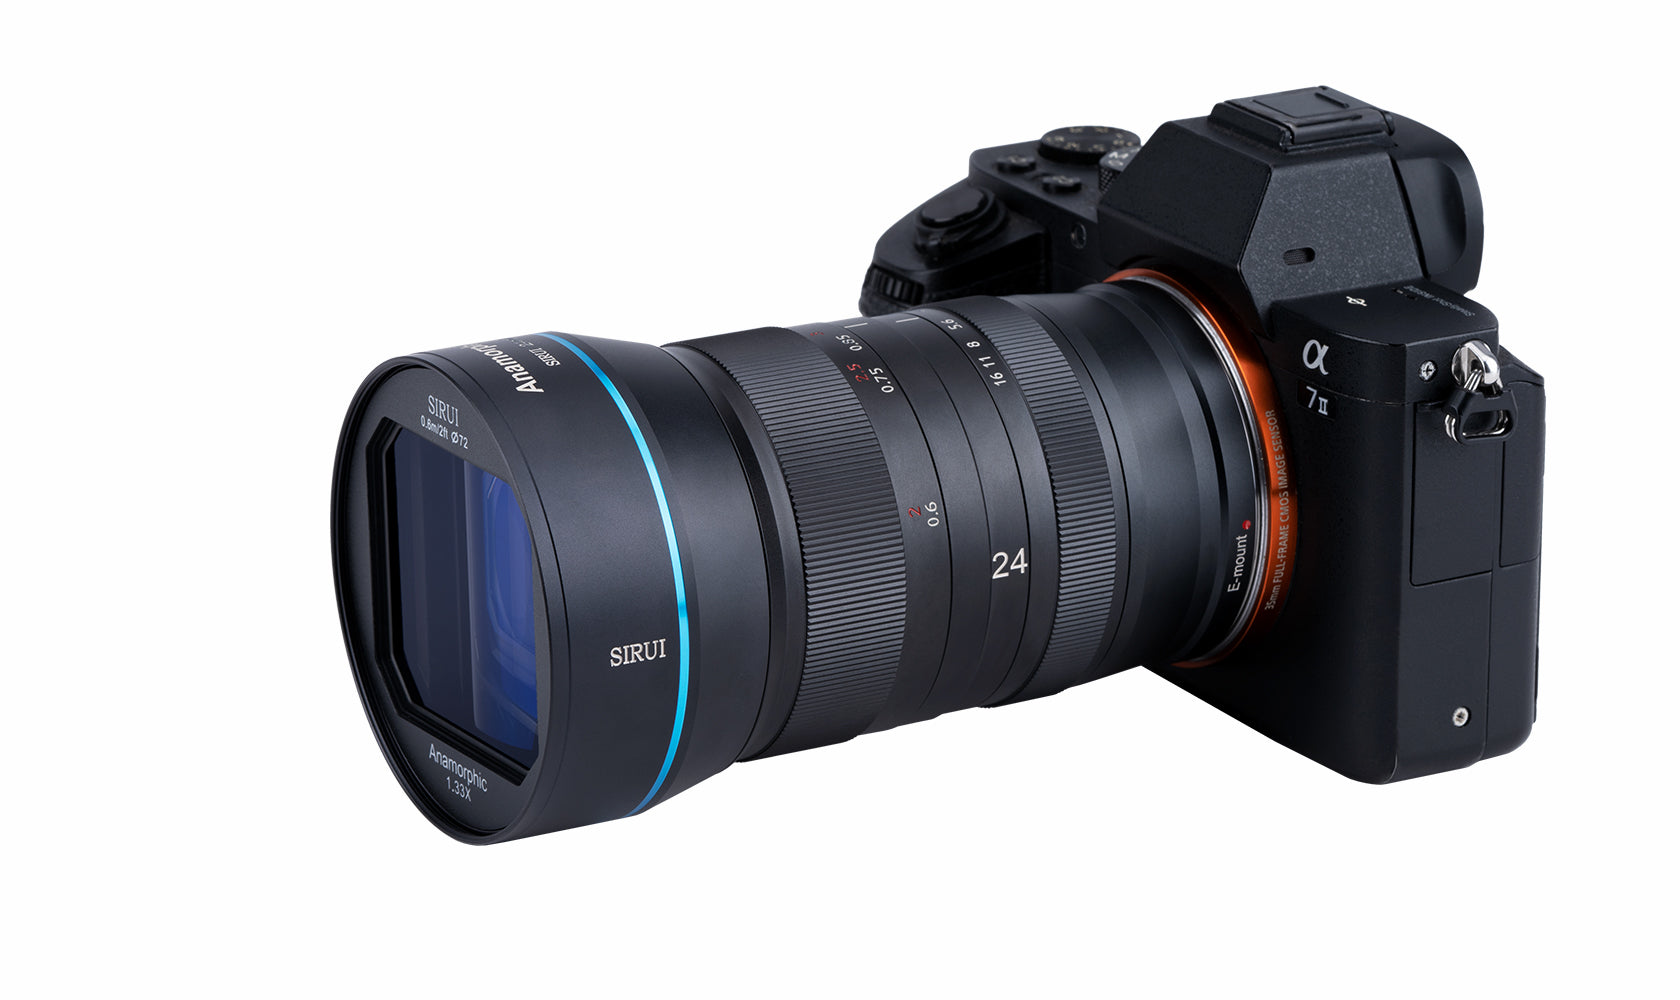 SIRUI 24mm F2.8 1.33x APS-C Lens | Anamorphic Lens – SIRUI